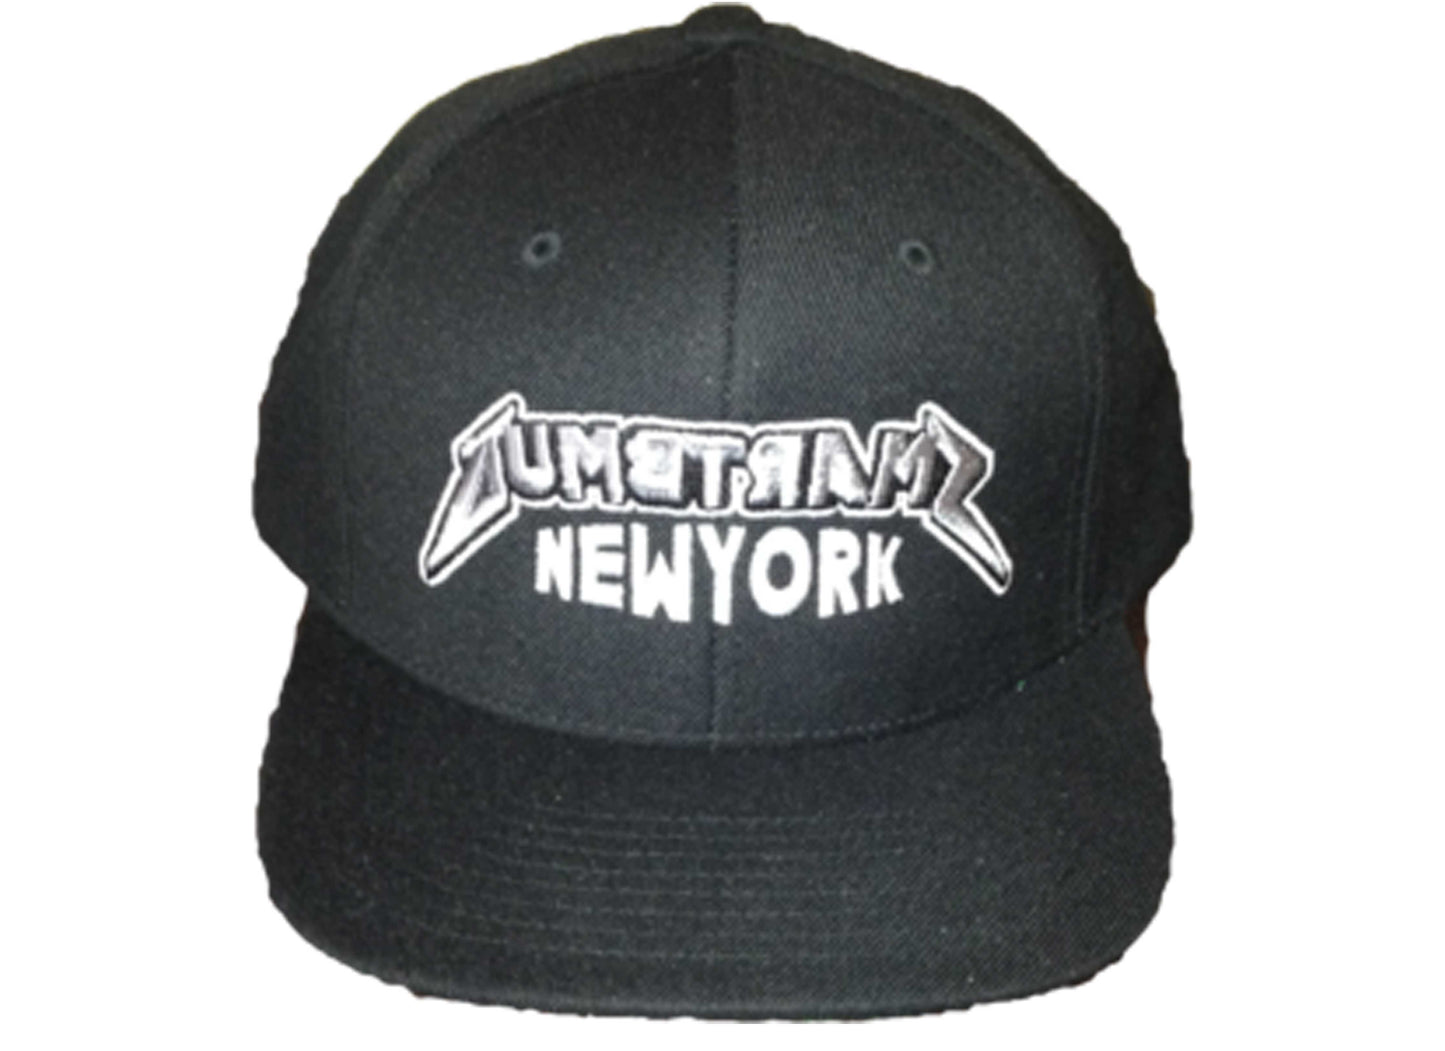 Front view of Black Logo Snapback hat cap by Dumbsmart New York